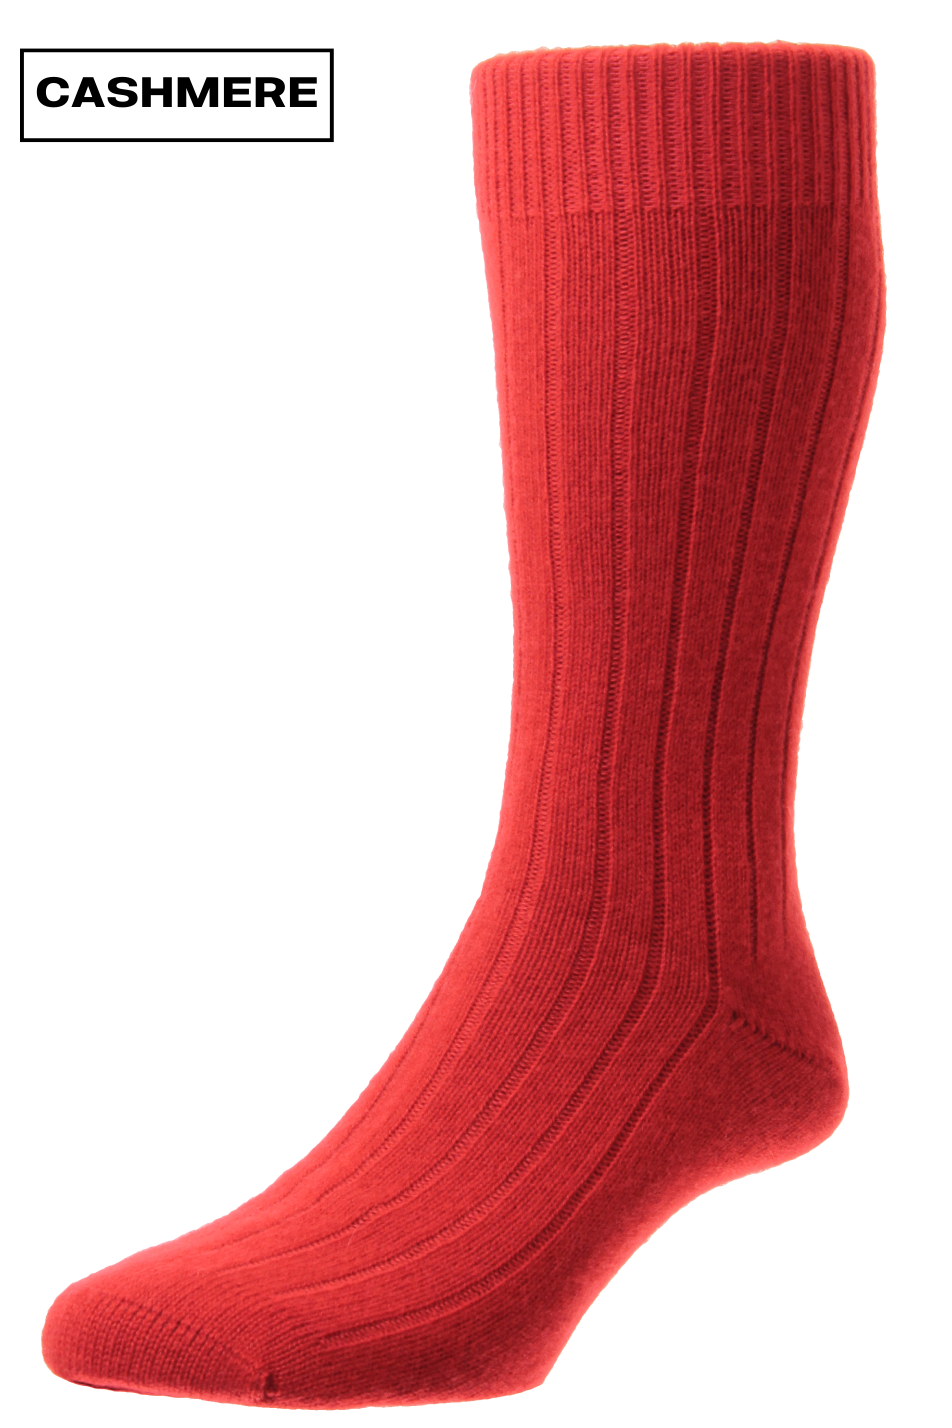 Pantherella Men's Cashmere Waddington Rib Sock